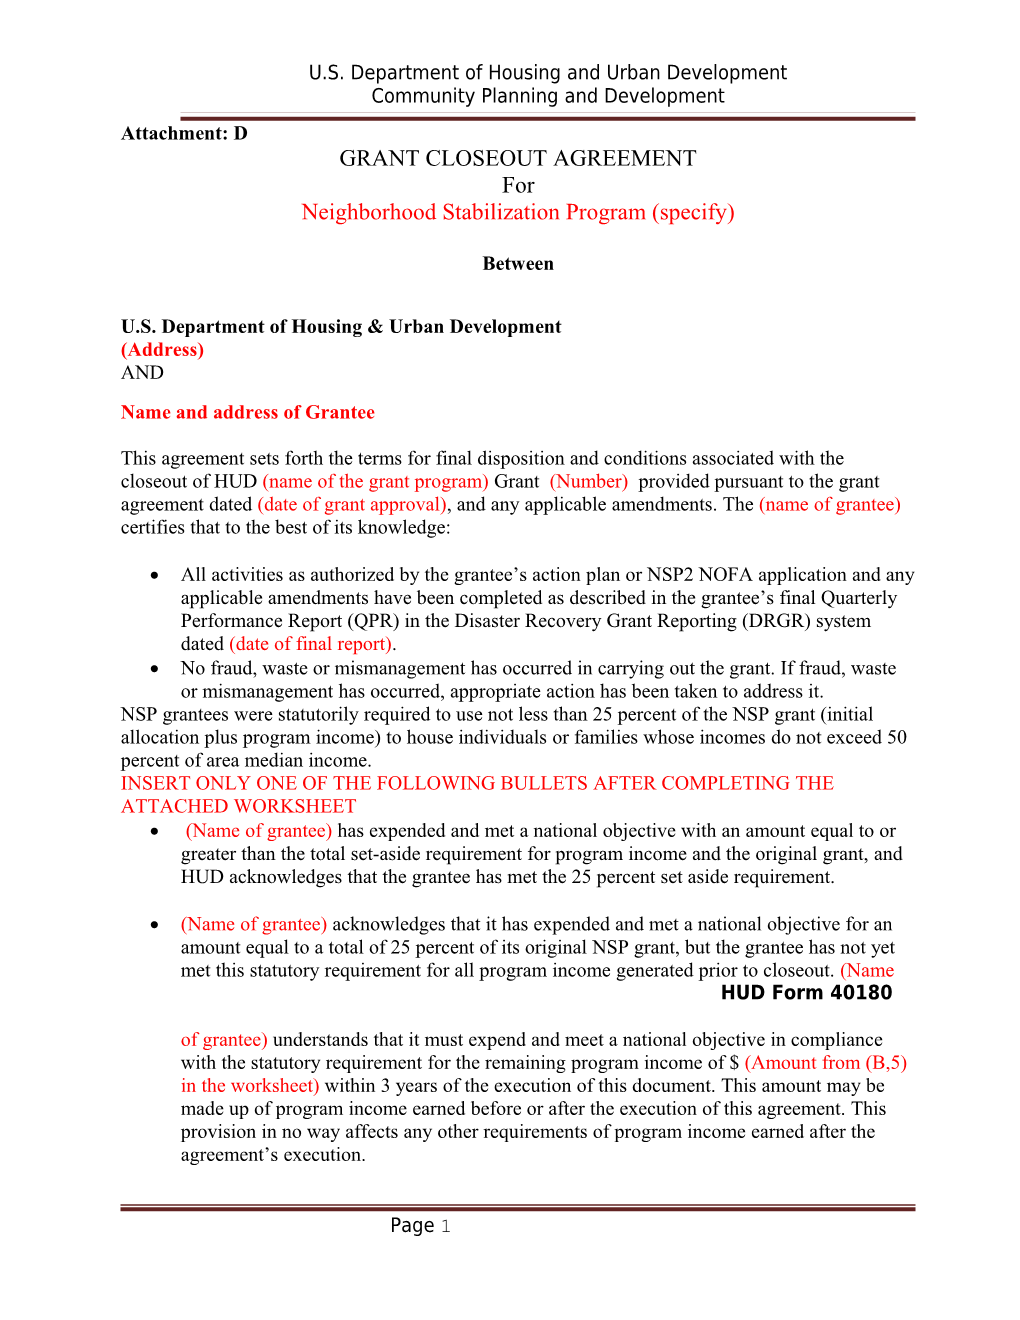 Attachment D - NSP Grant Closeout Agreement